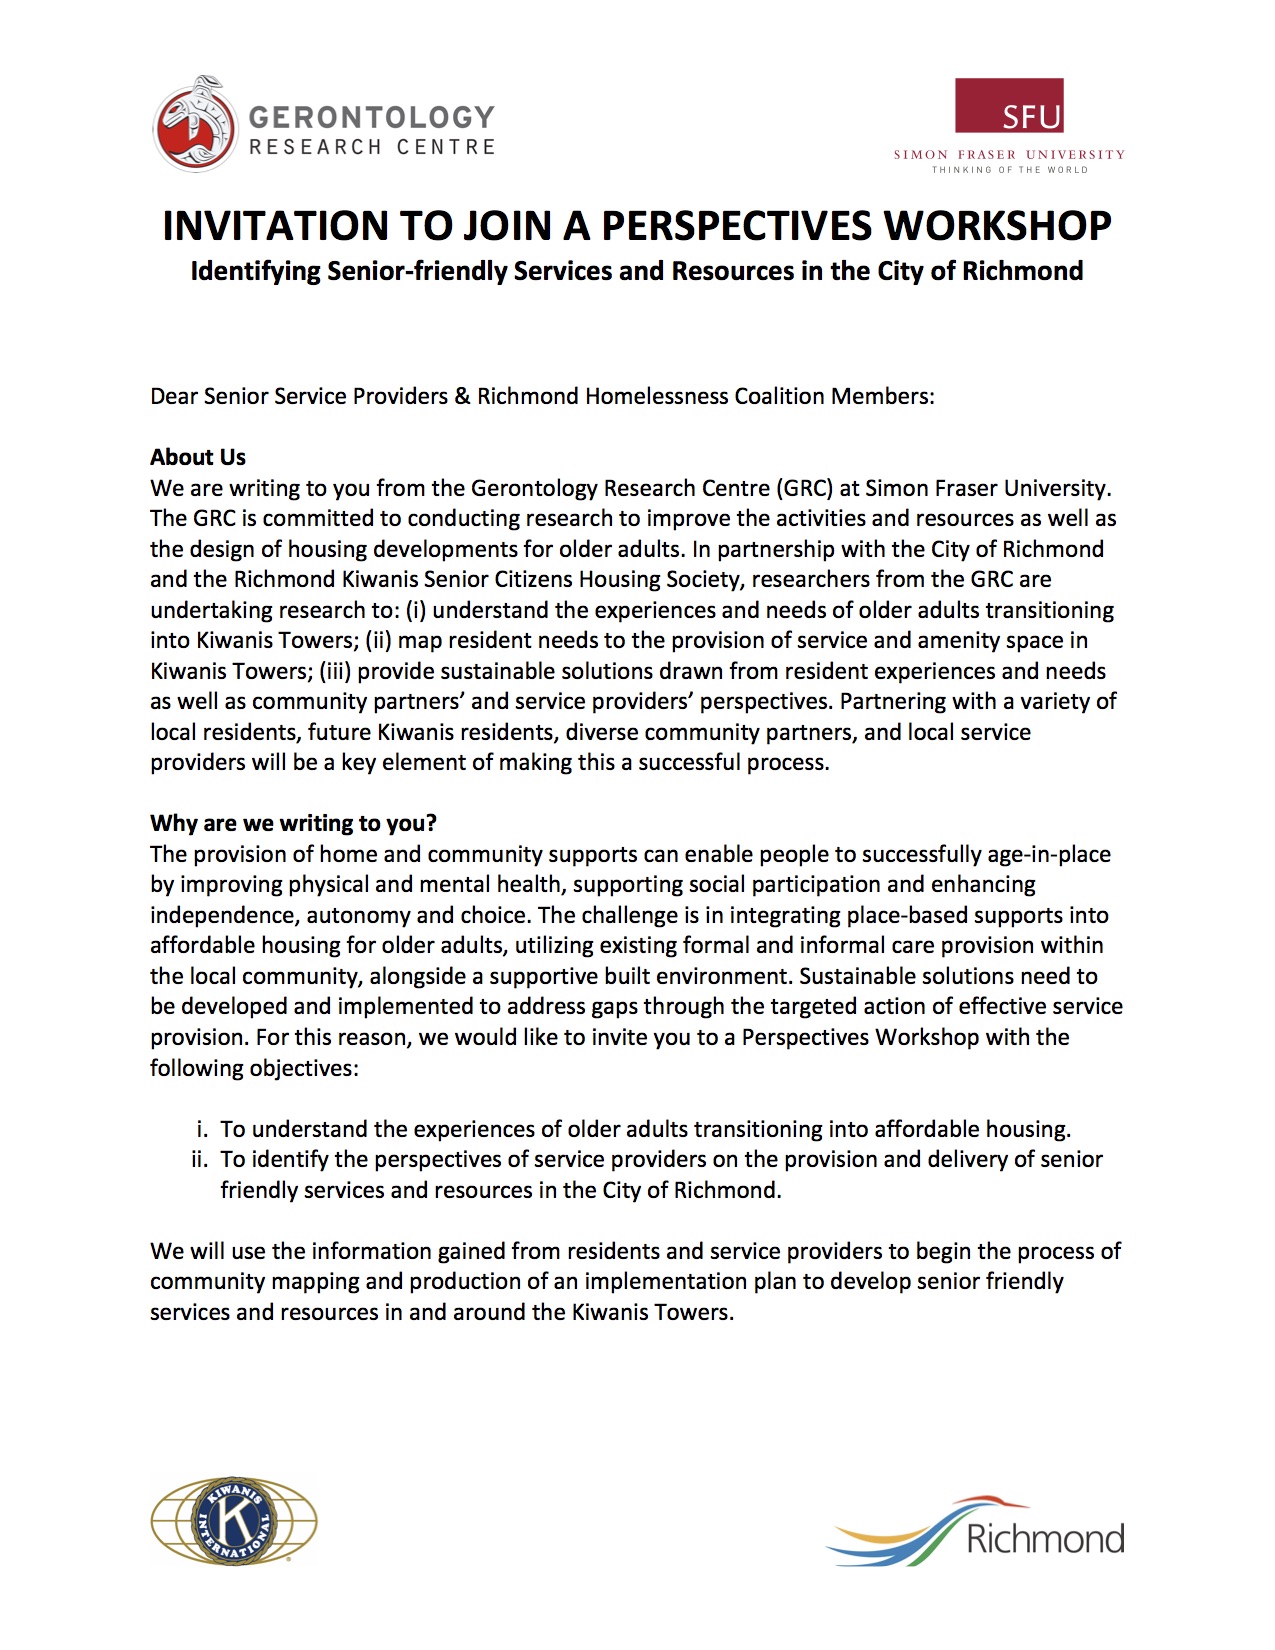 Gerontology Research Centre Perspectives Workshop Richmond